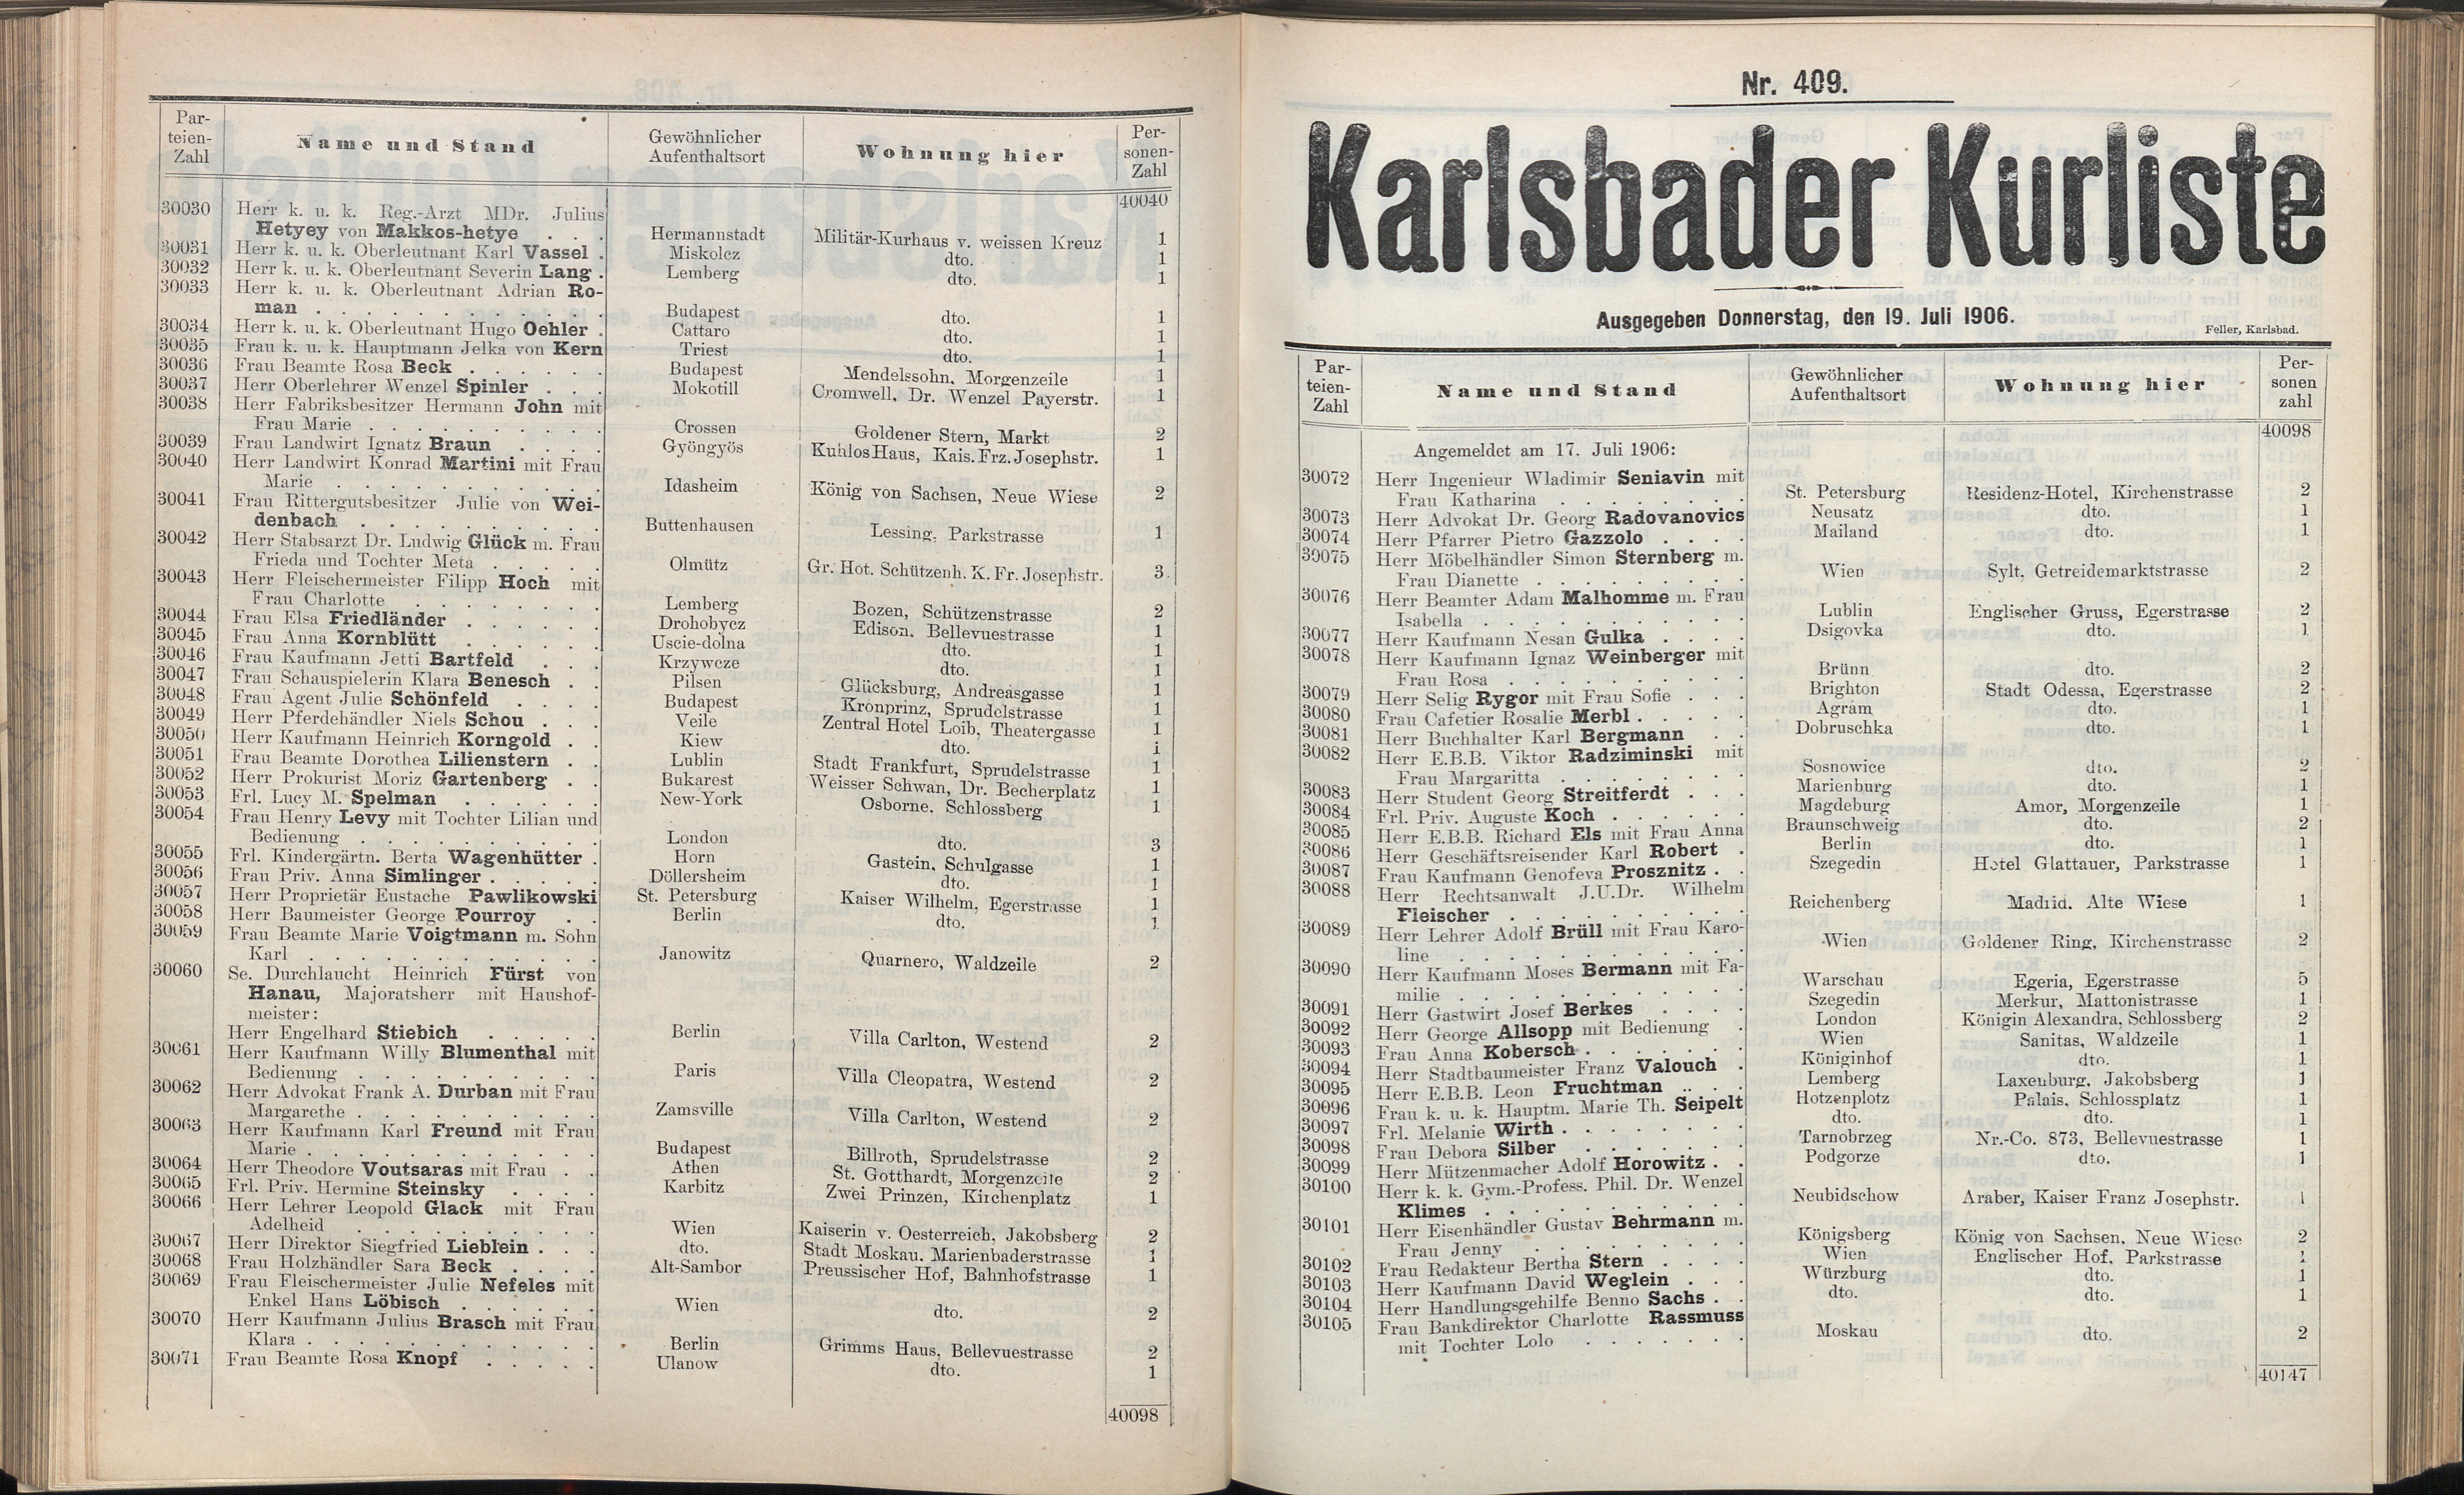 524. soap-kv_knihovna_karlsbader-kurliste-1906_5250